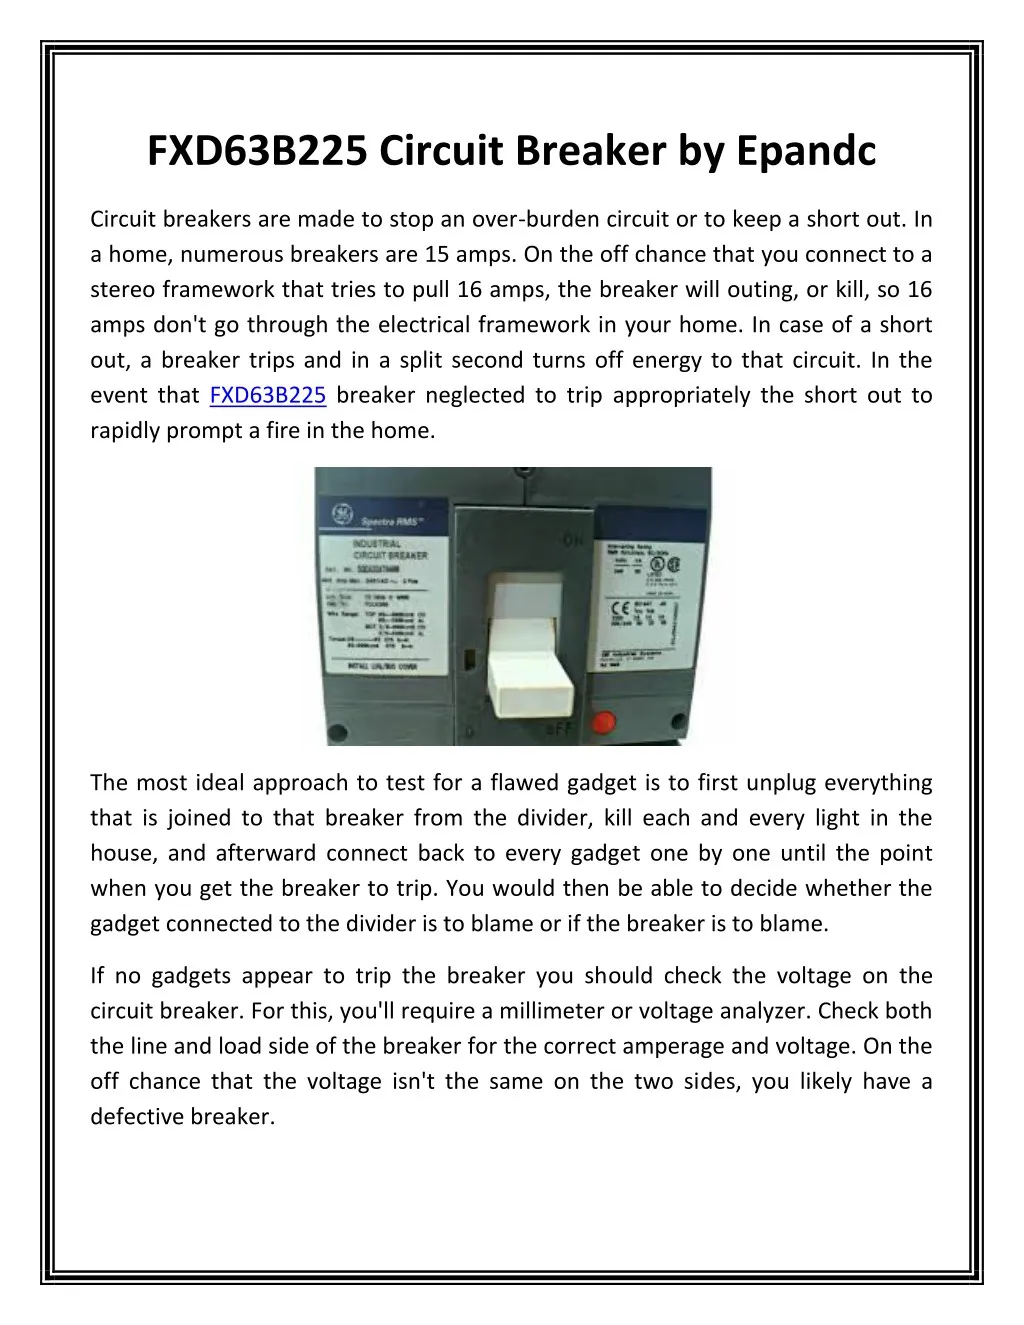 fxd63b225 circuit breaker by epandc